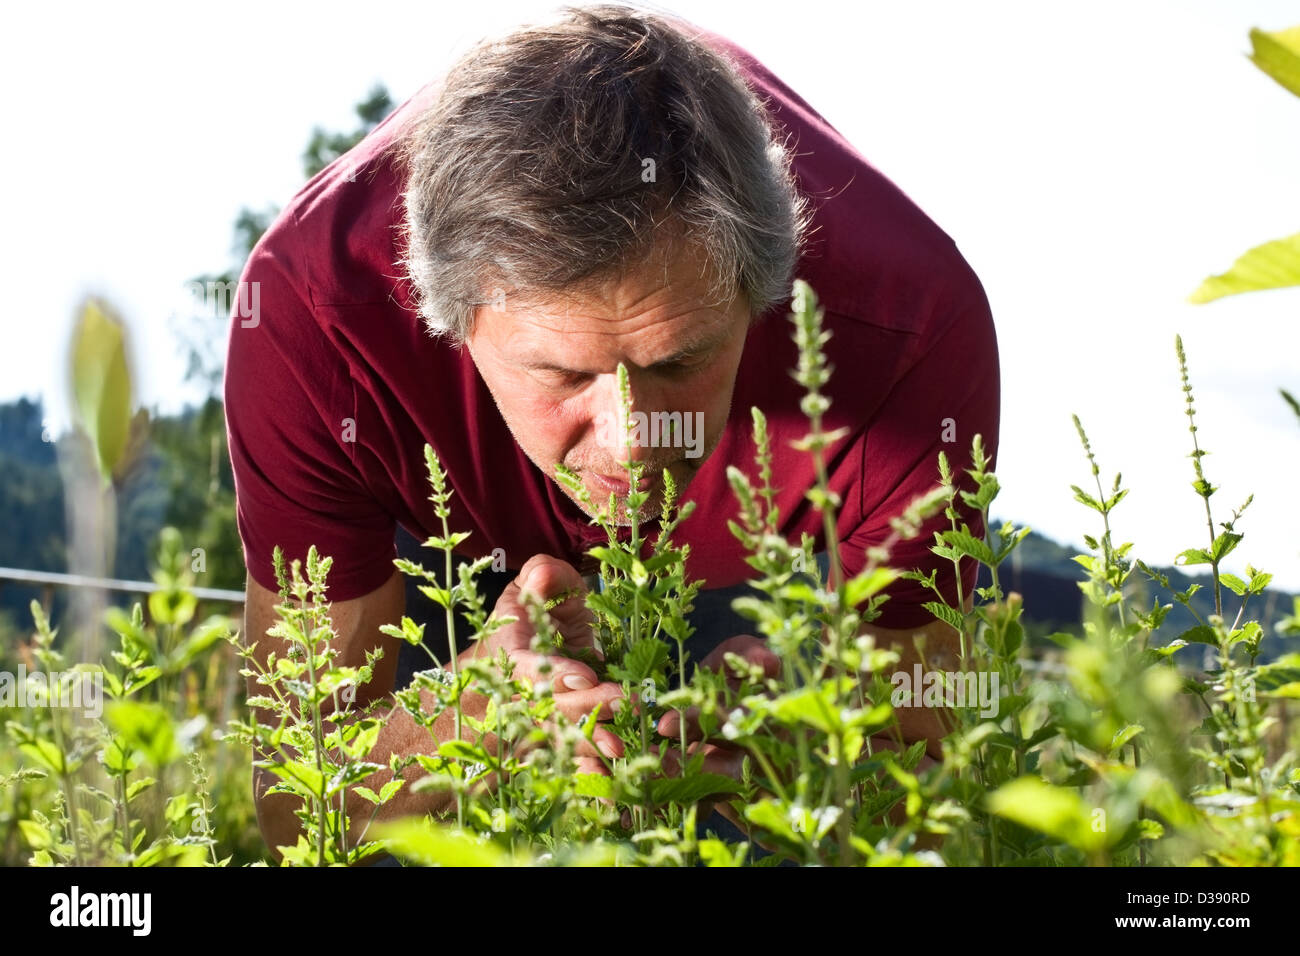 attraktive ältere Mann in seinem Garten riecht nach Pepffermint Gebüsch Stockfoto